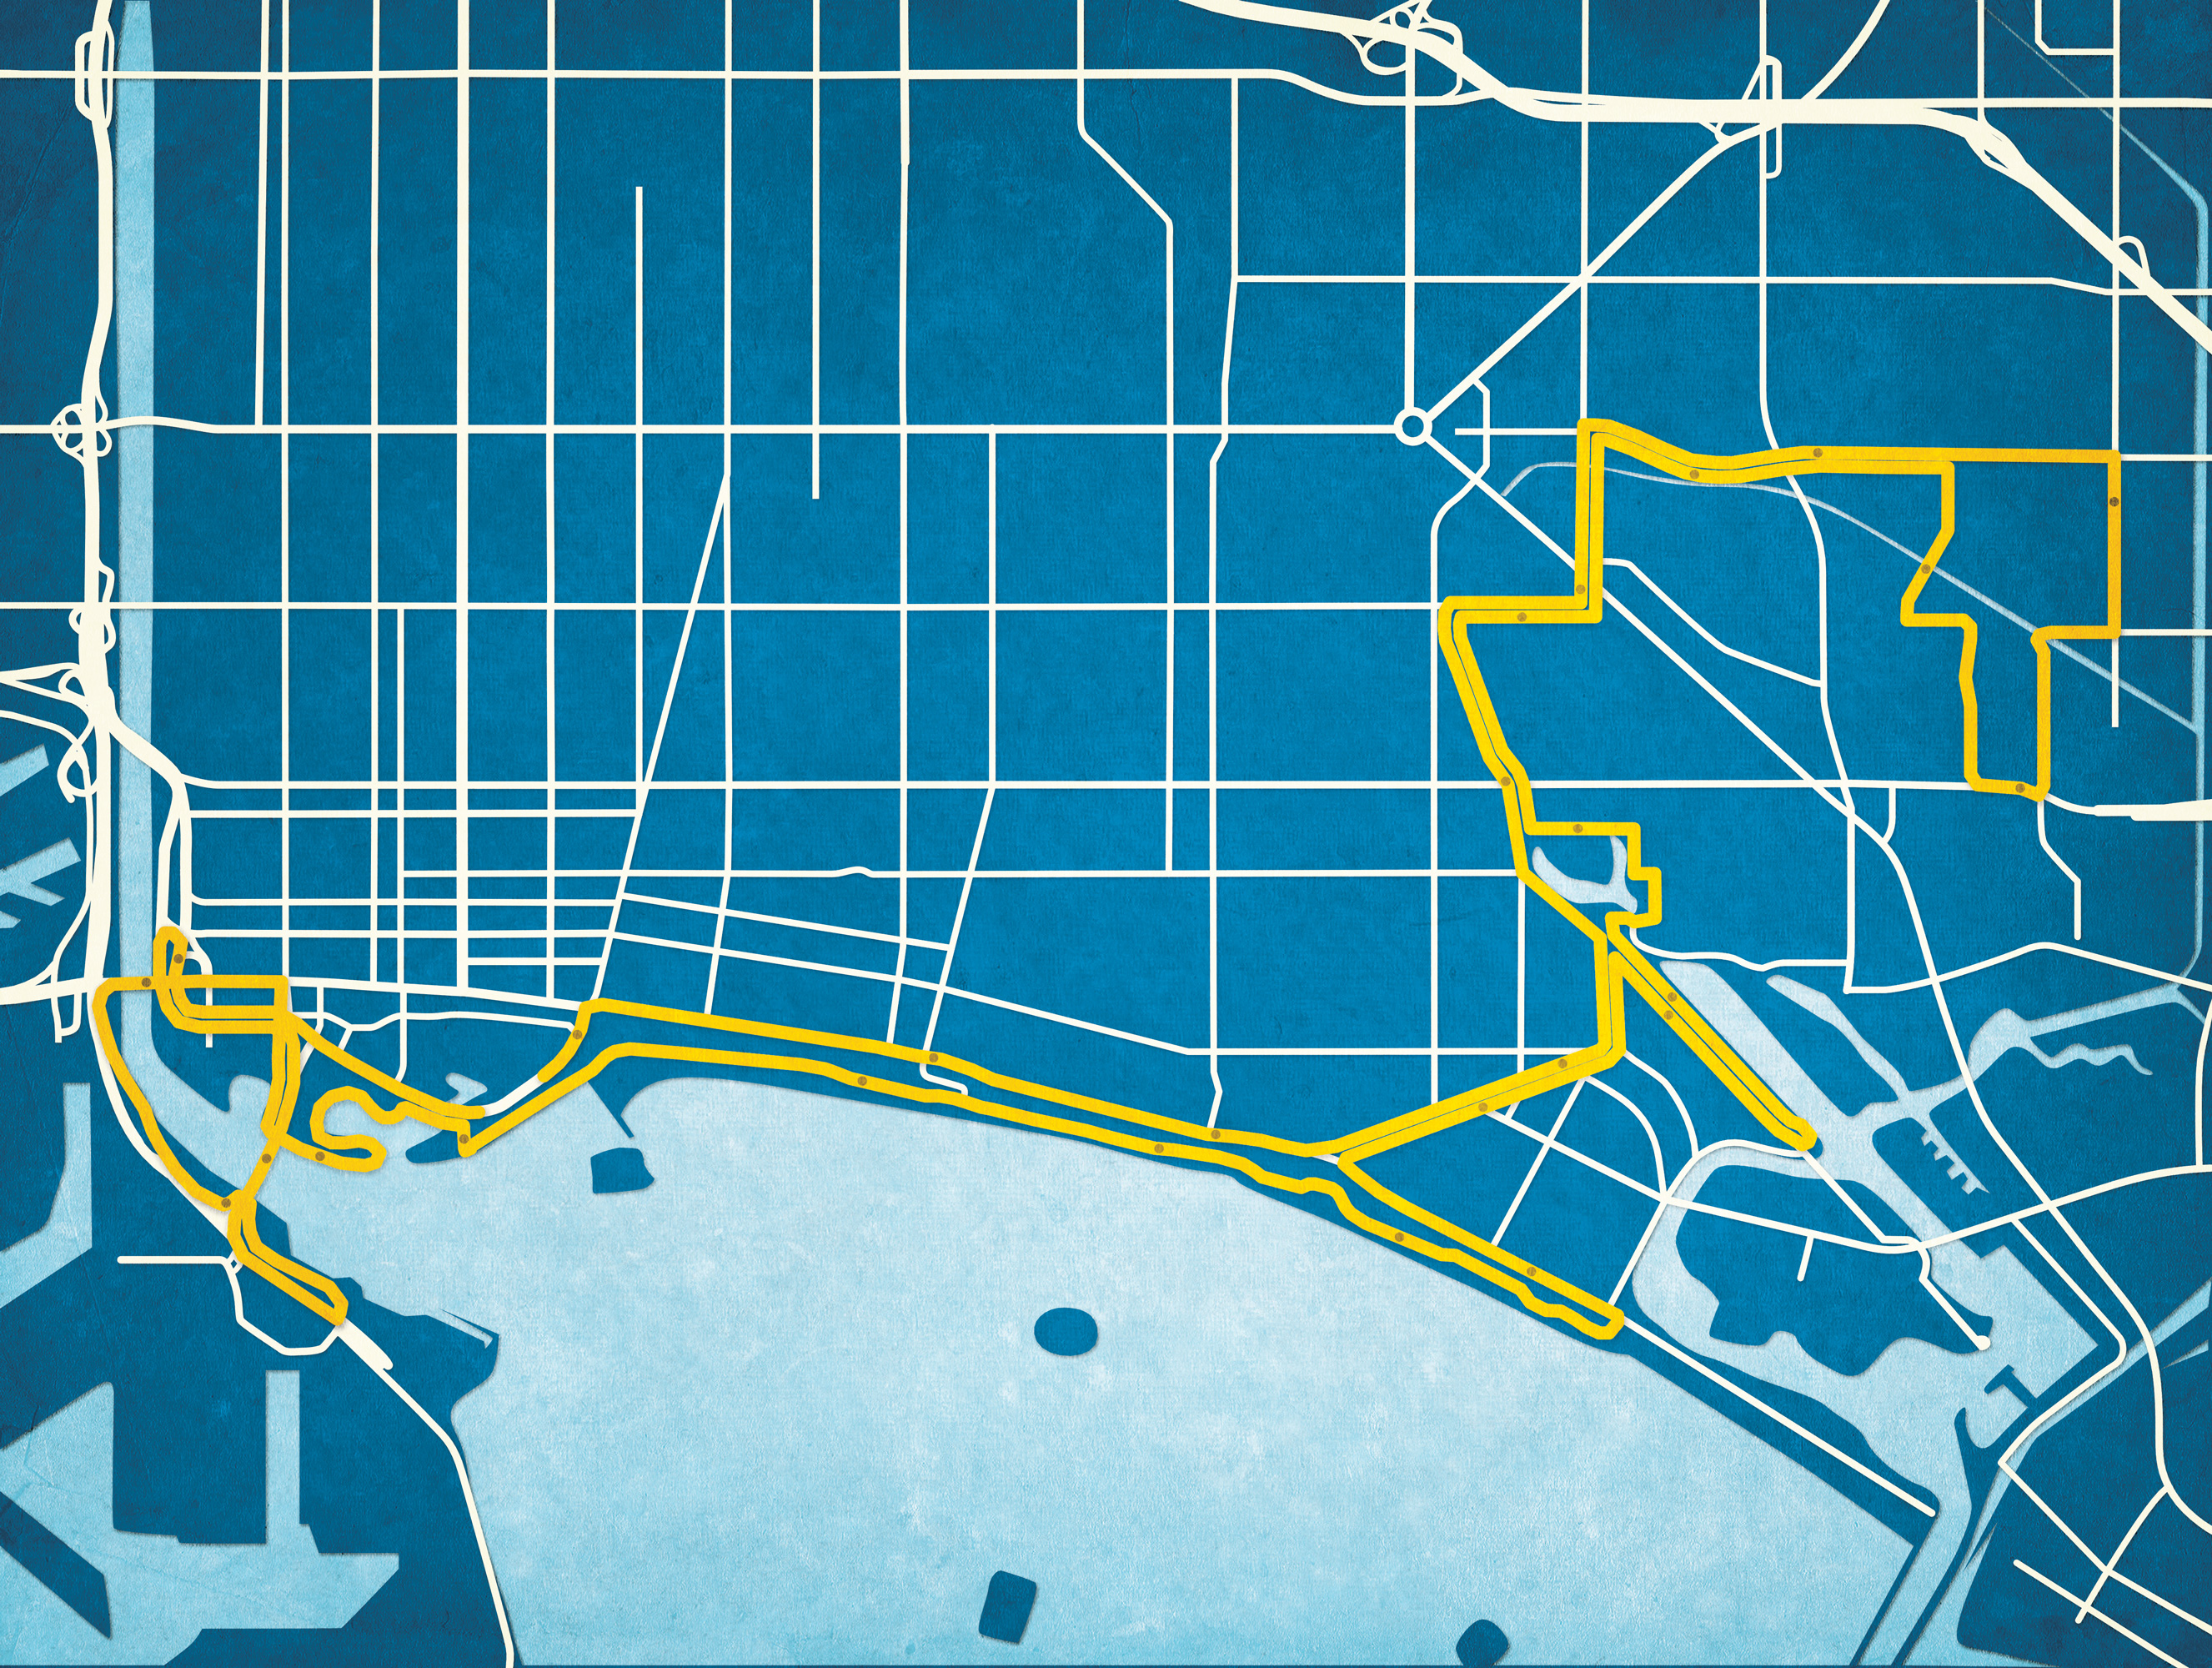 Long Beach International City Bank Marathon Course Map City Prints